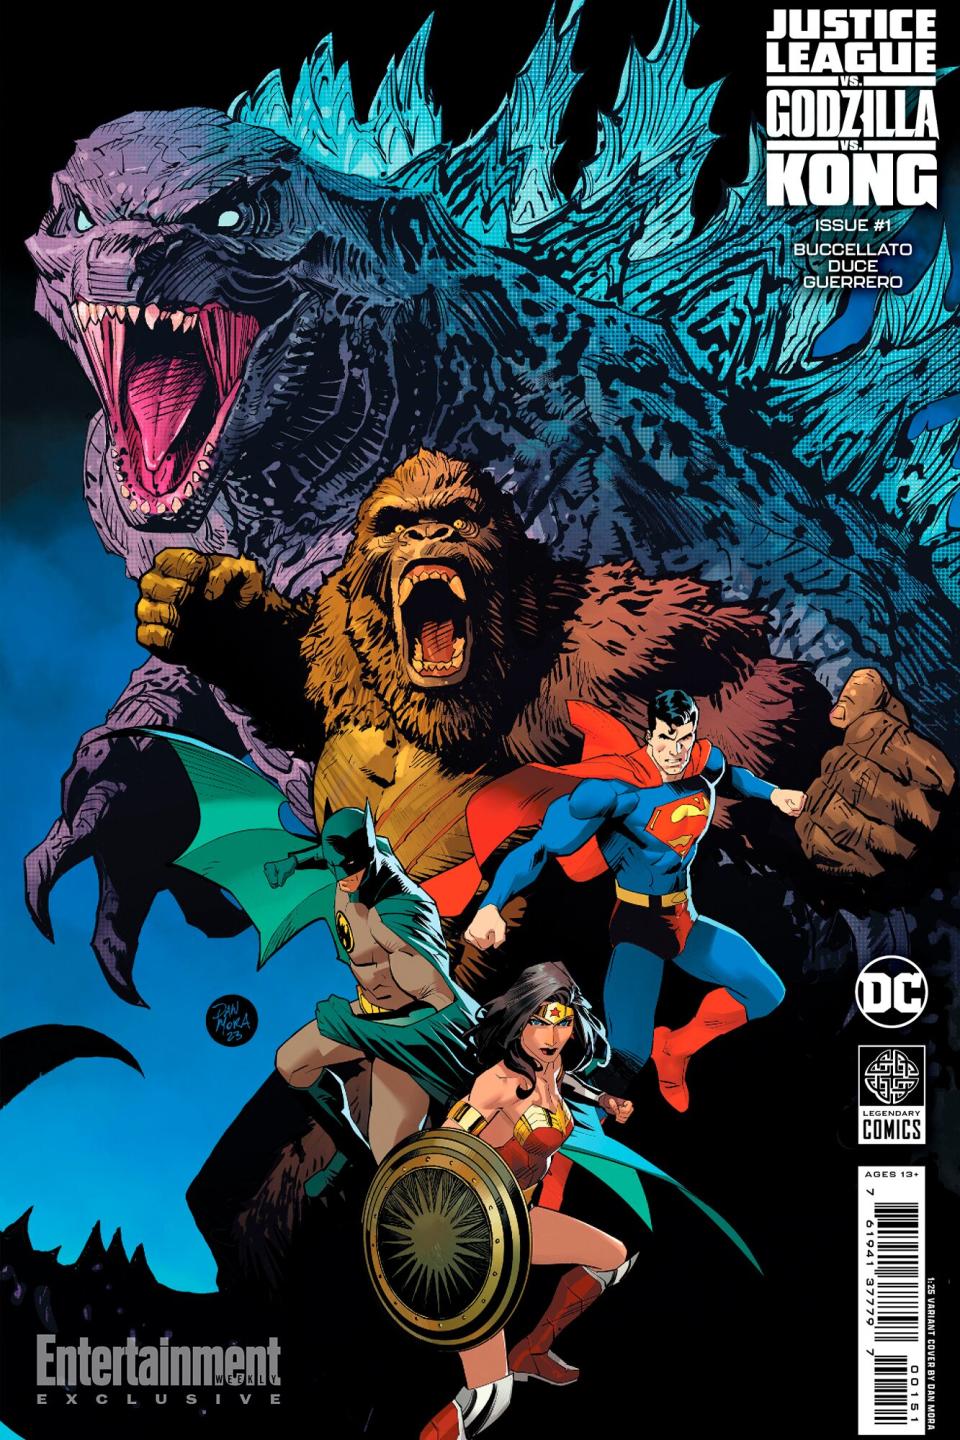 Variant cover for 'Justice League vs. Godzilla vs. Kong' by Dan Mora